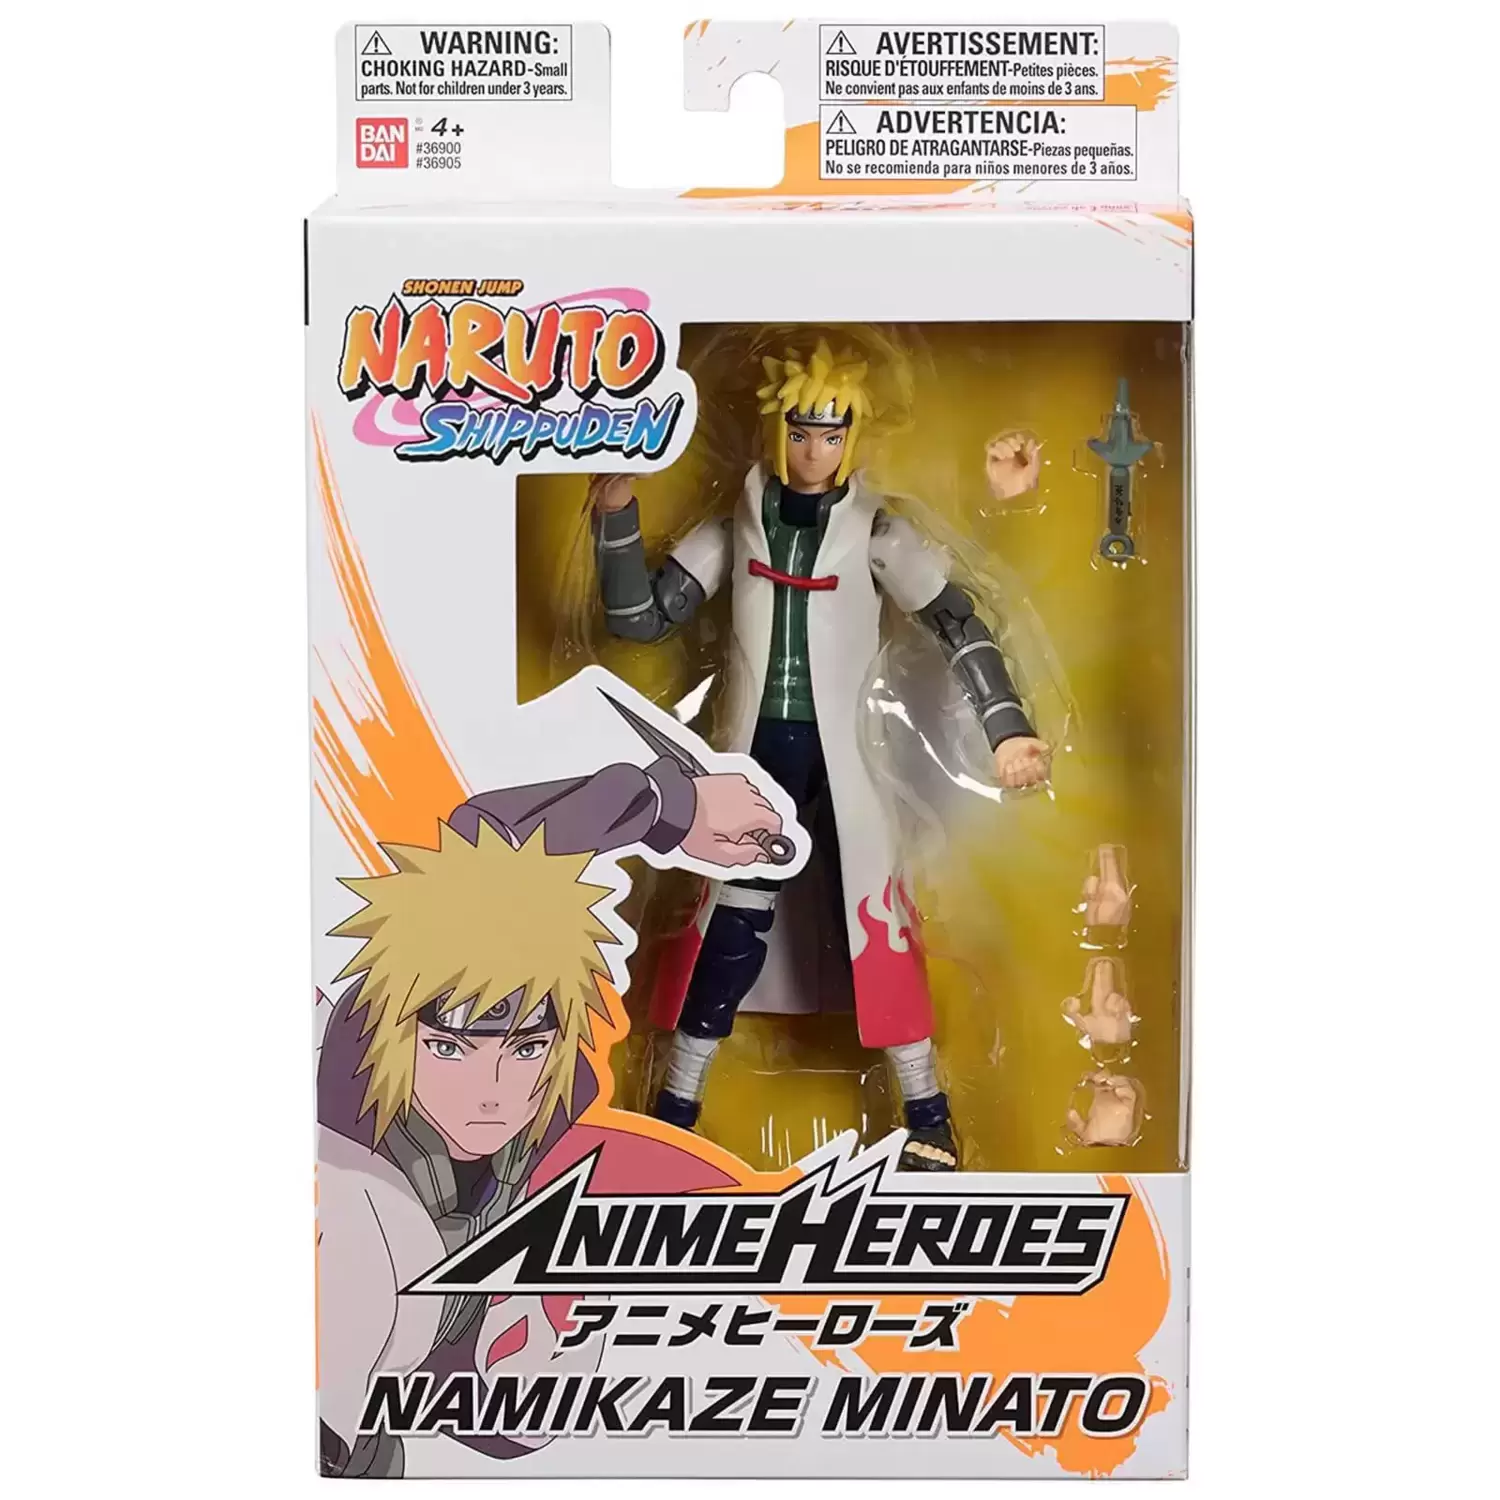 Anime Heroes - Bandai - Naruto Shippuden - Namikaze Minato